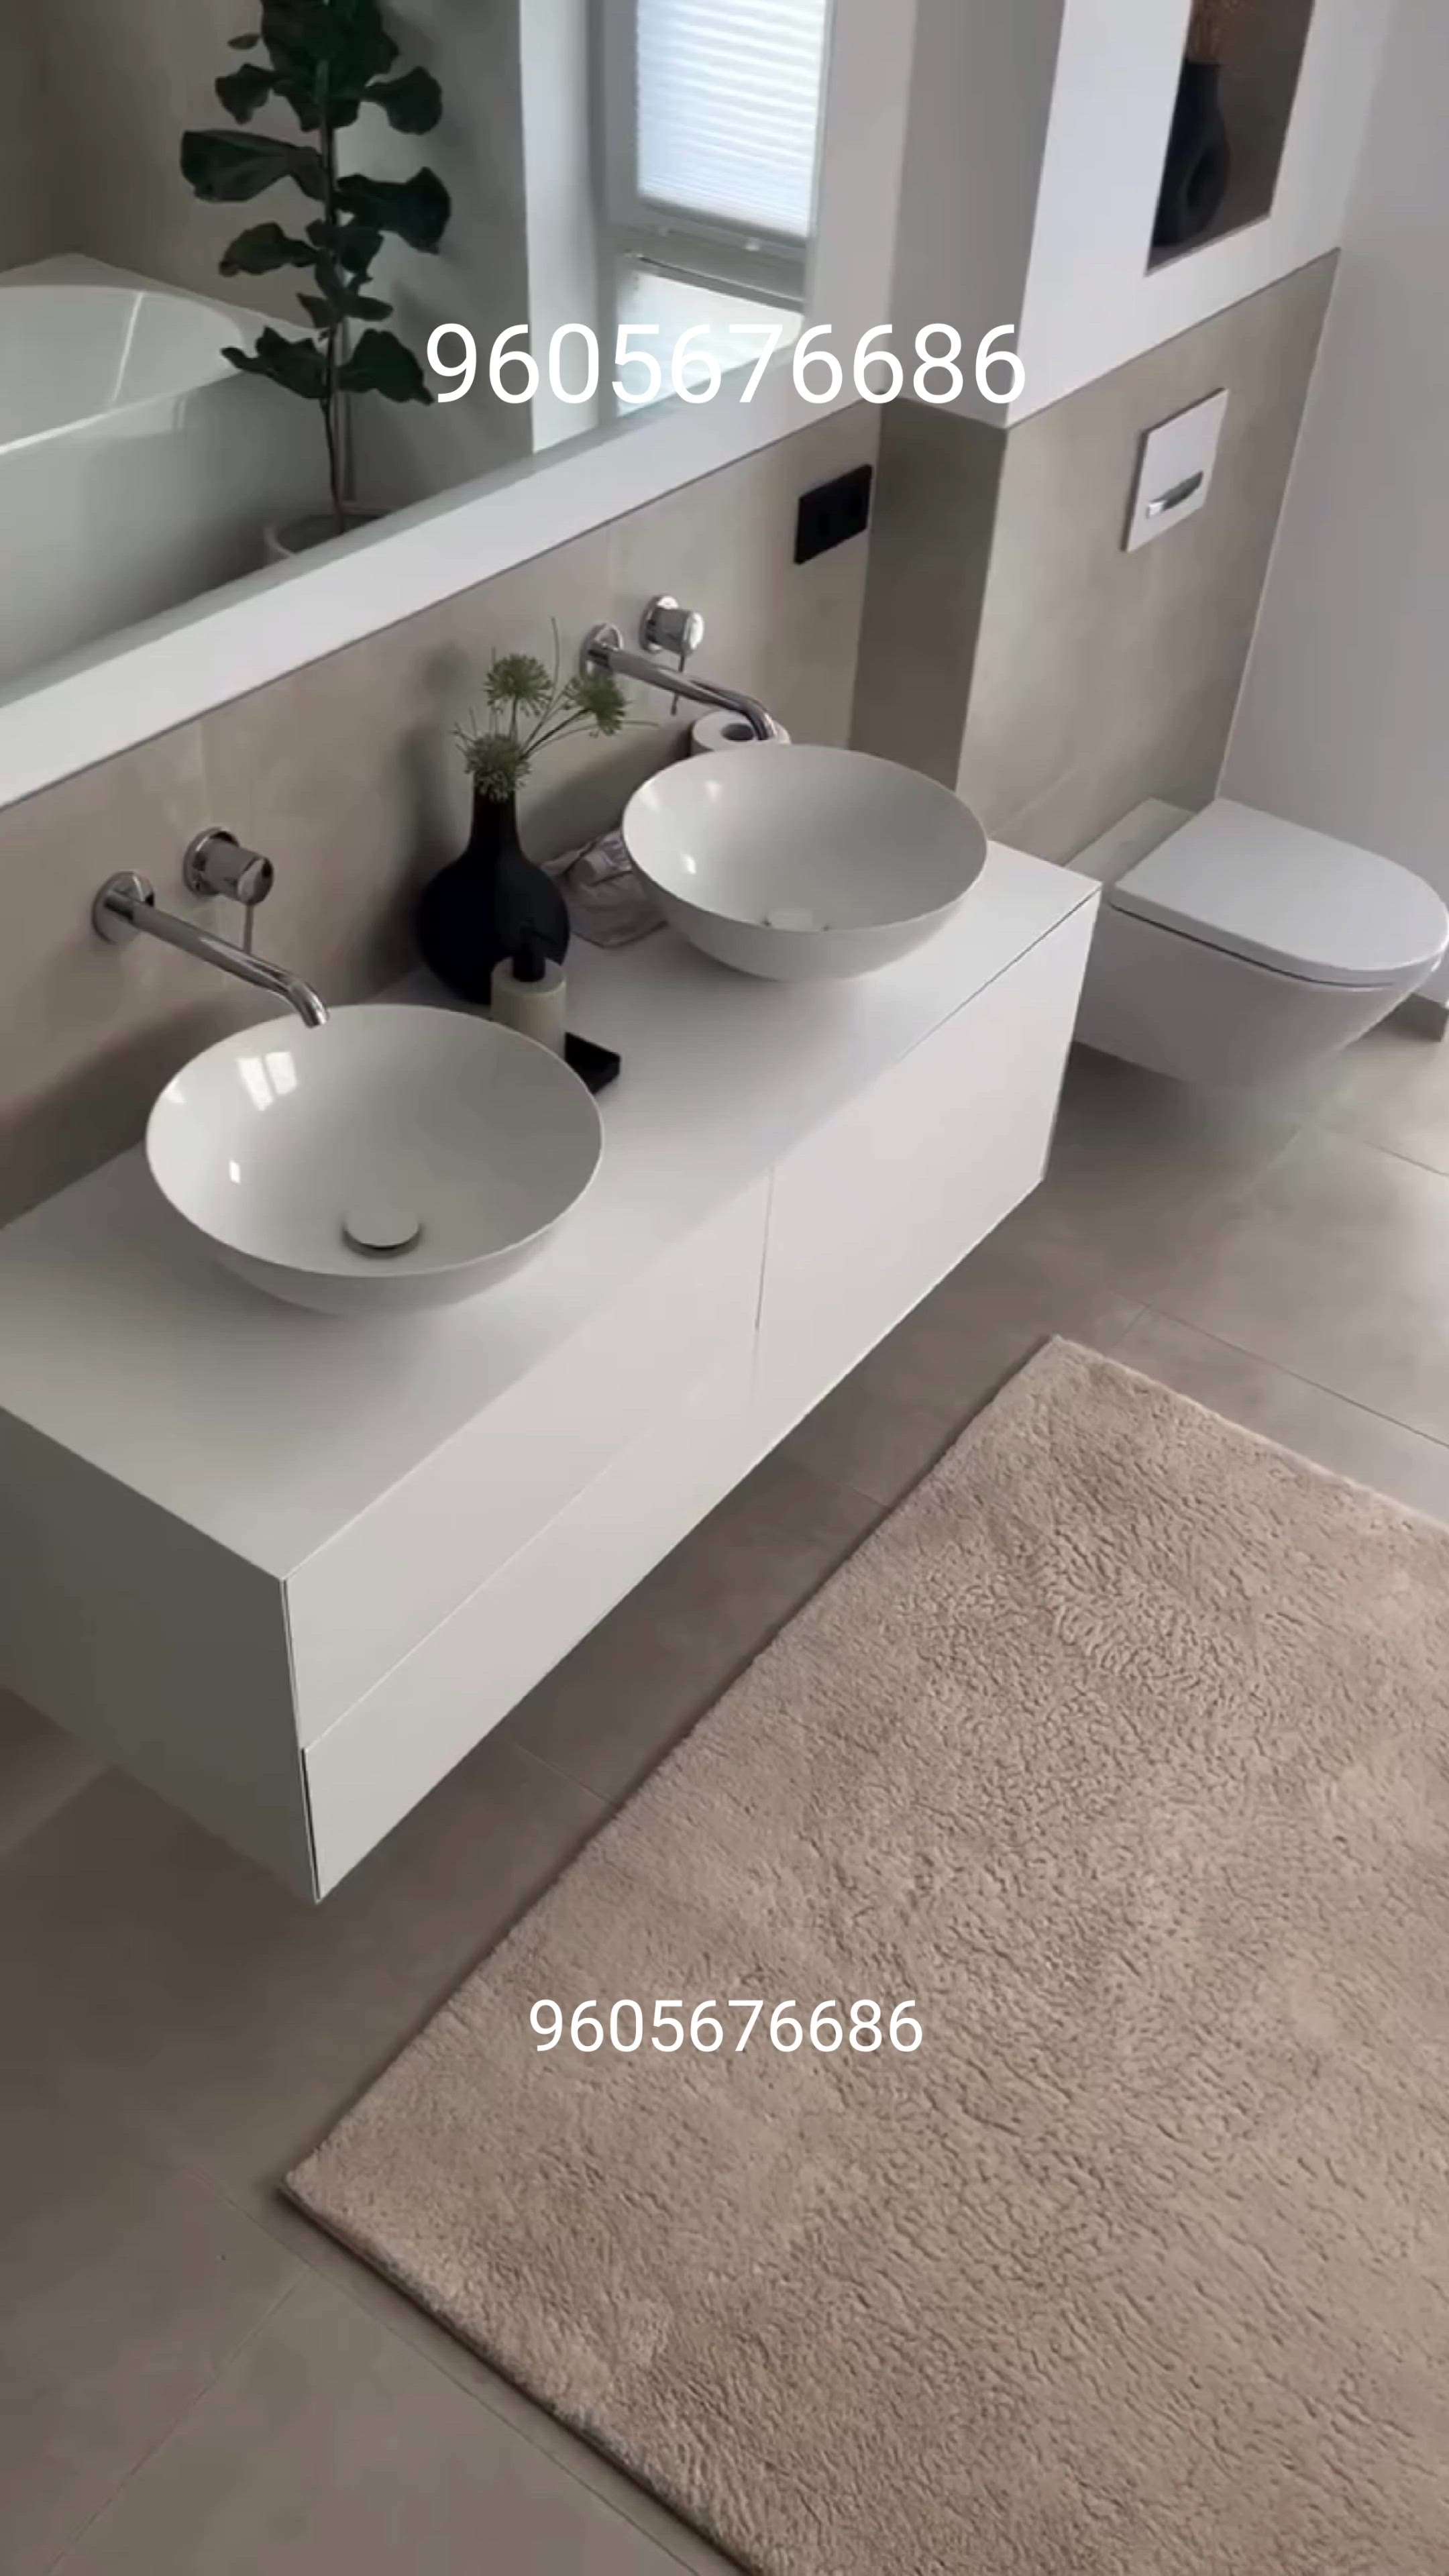 For interior solution - What's app 9605676686

#KitchenInterior 
#Architectural&Interior 
#LivingRoomTVCabinet 
#BathroomDesigns 
#modernbathroom 
#StaircaseHandRail 
#islandkitchen 
#LivingroomDesigns